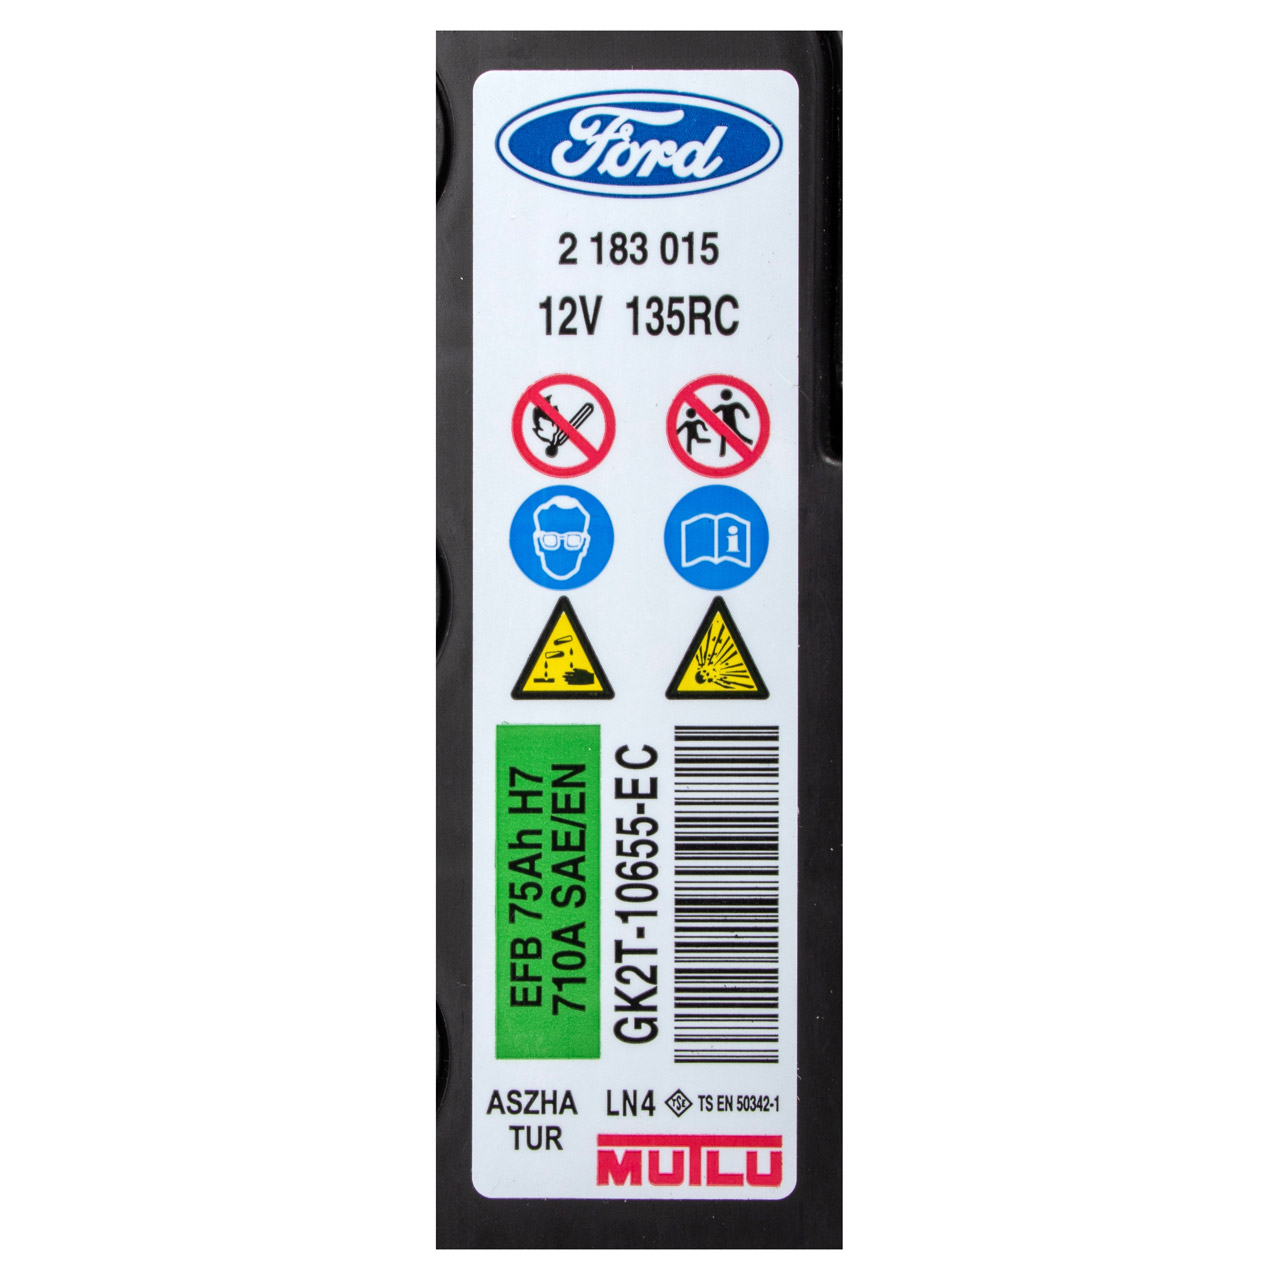 ORIGINAL Ford Autobatterie Batterie Starterbatterie 12V 710A 75AH 2183015